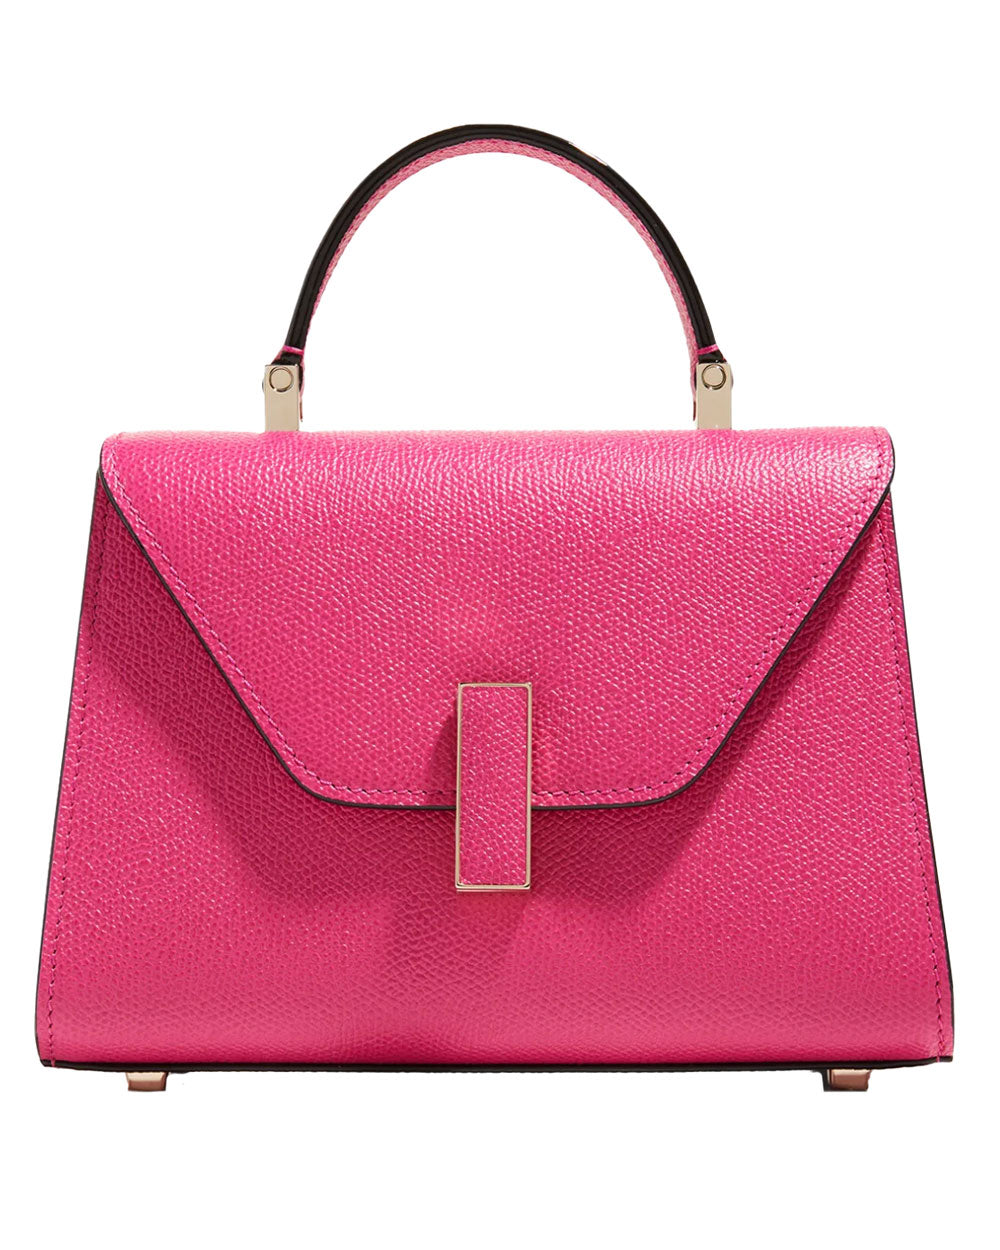 Iside leather handbag Valextra Beige in Leather - 40817055